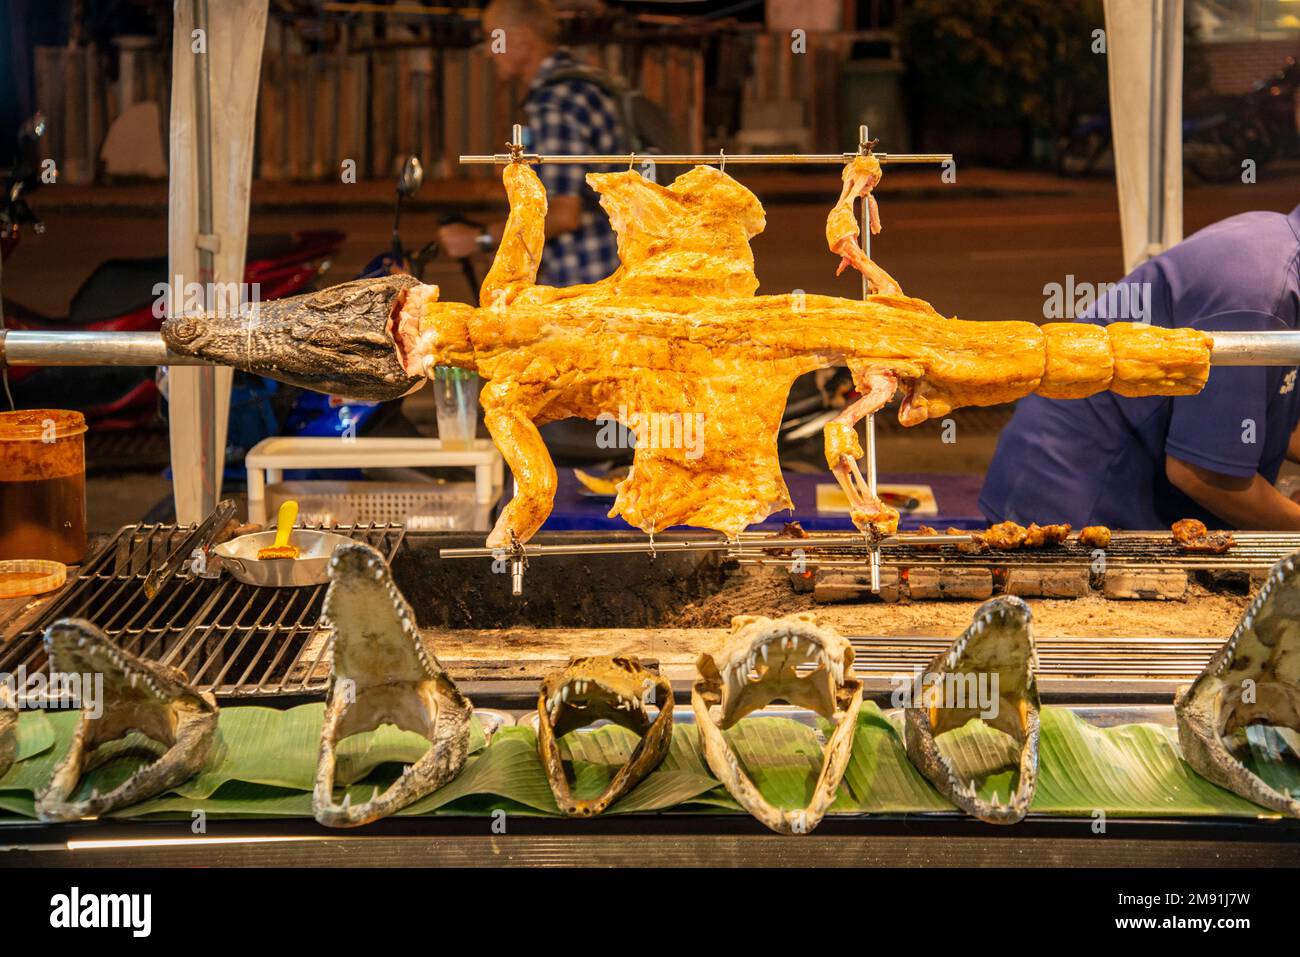 Viande de crocodile et grill à la Runway Street Food Nightmarket dans la ville de Pattaya dans la province de Chonburi en Thaïlande, Pattaya, nov Banque D'Images